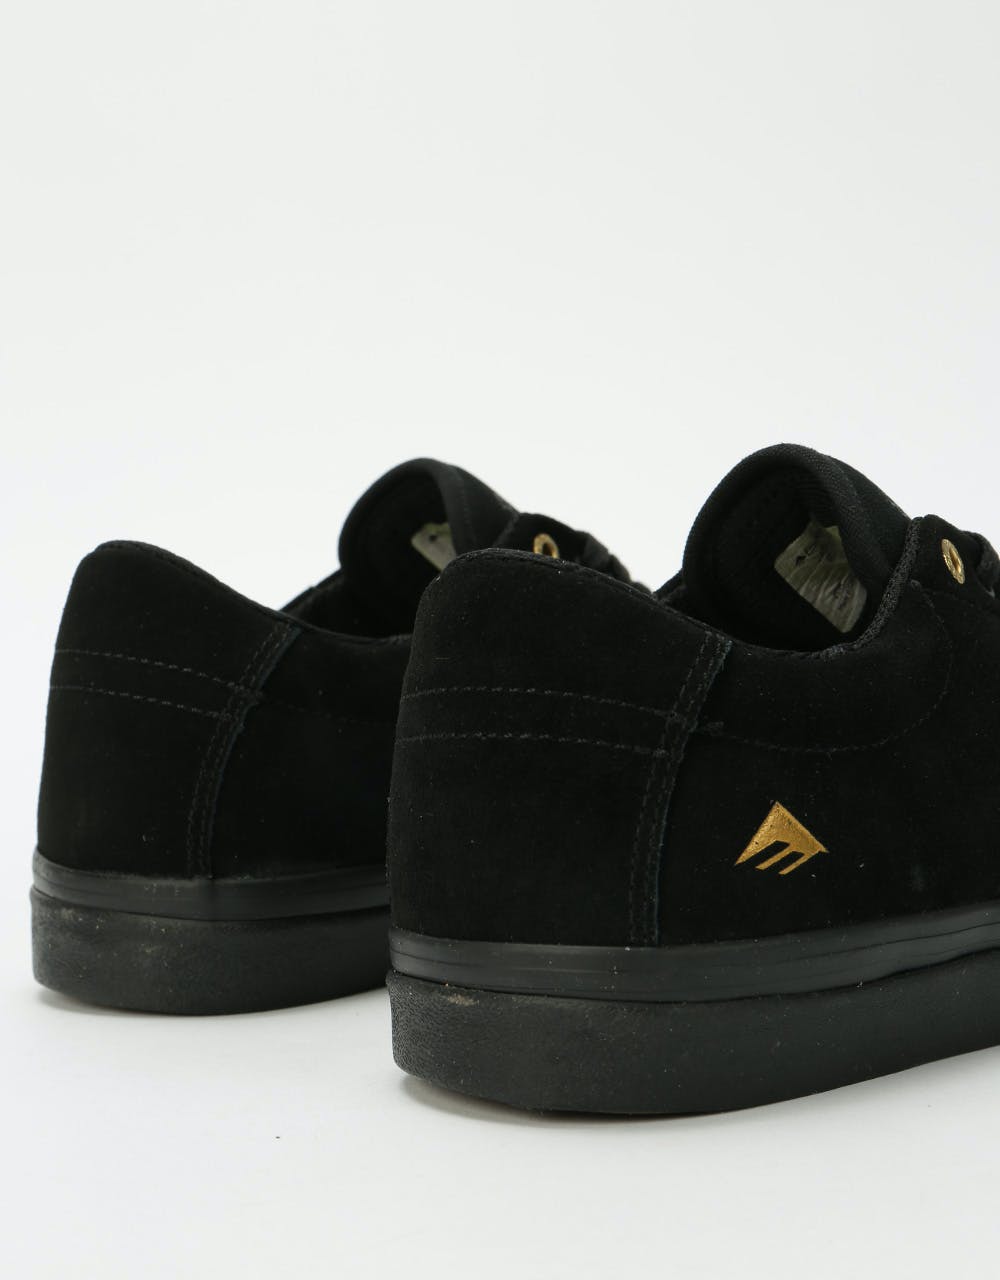 Emerica Provider Skate Shoes - Black/Black/Gum